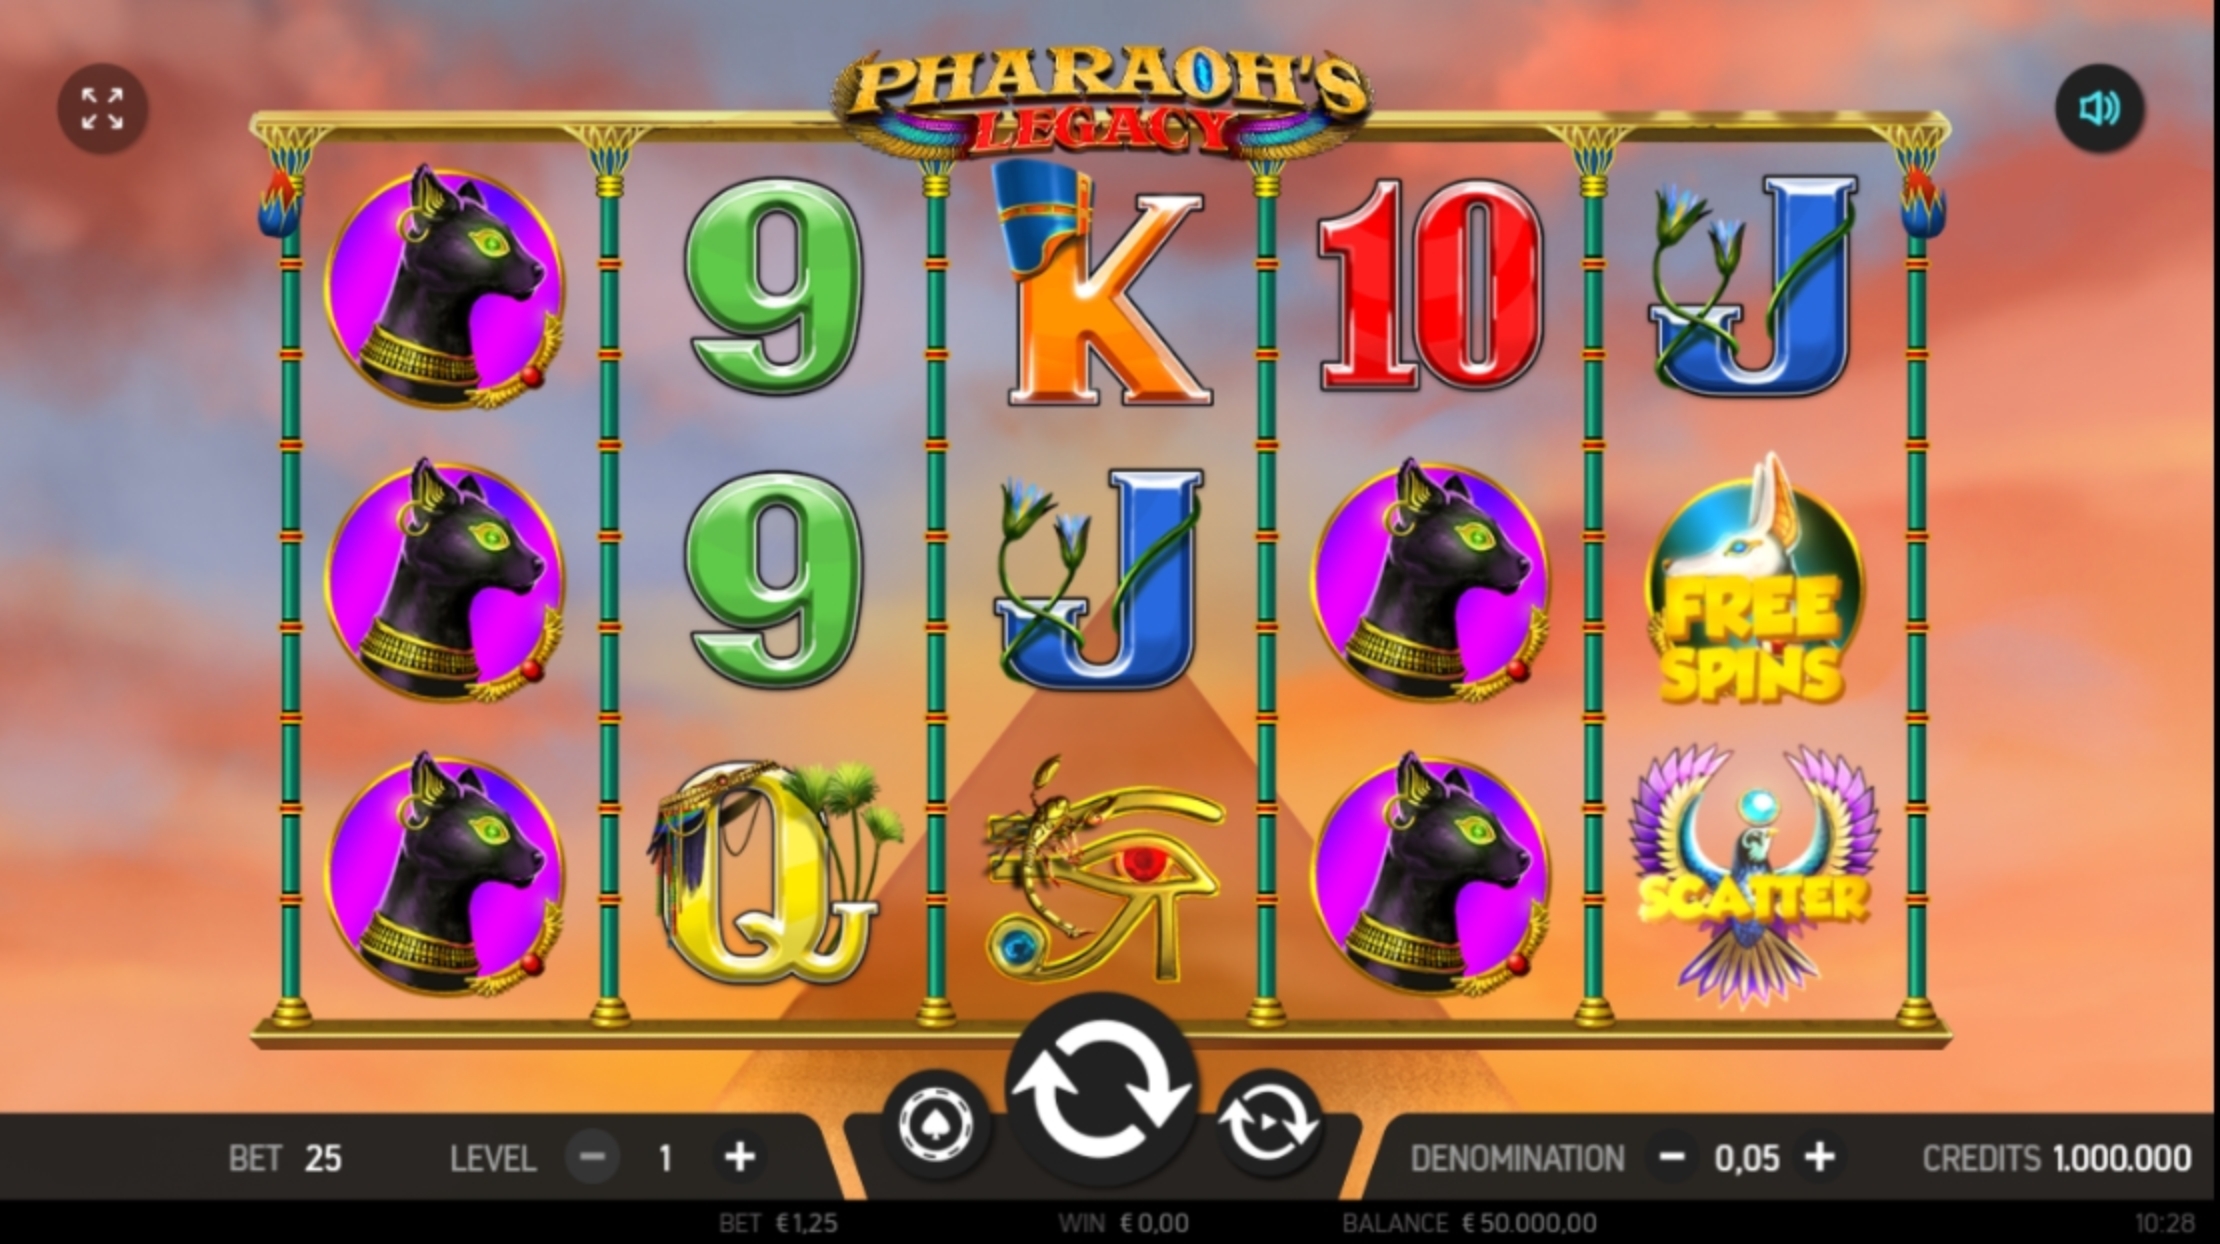 Reels in Pharaoh's Legacy Slot Game by FBM